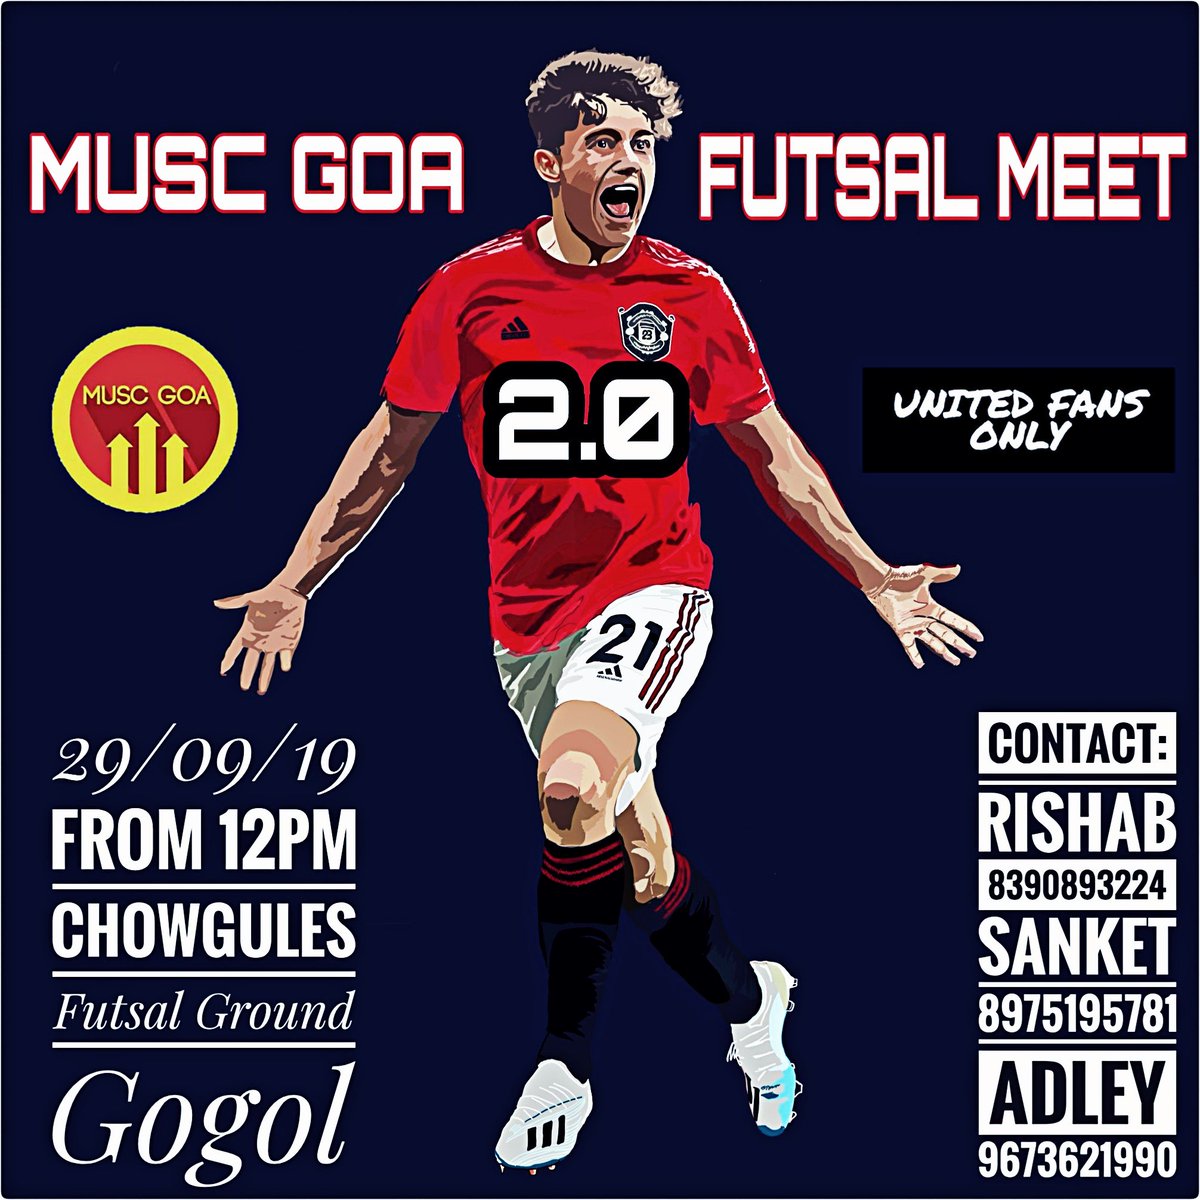 MUSC GOA FUTSAL MEET 2.0 IS HERE !!!! #MUFC #MUSCGOA